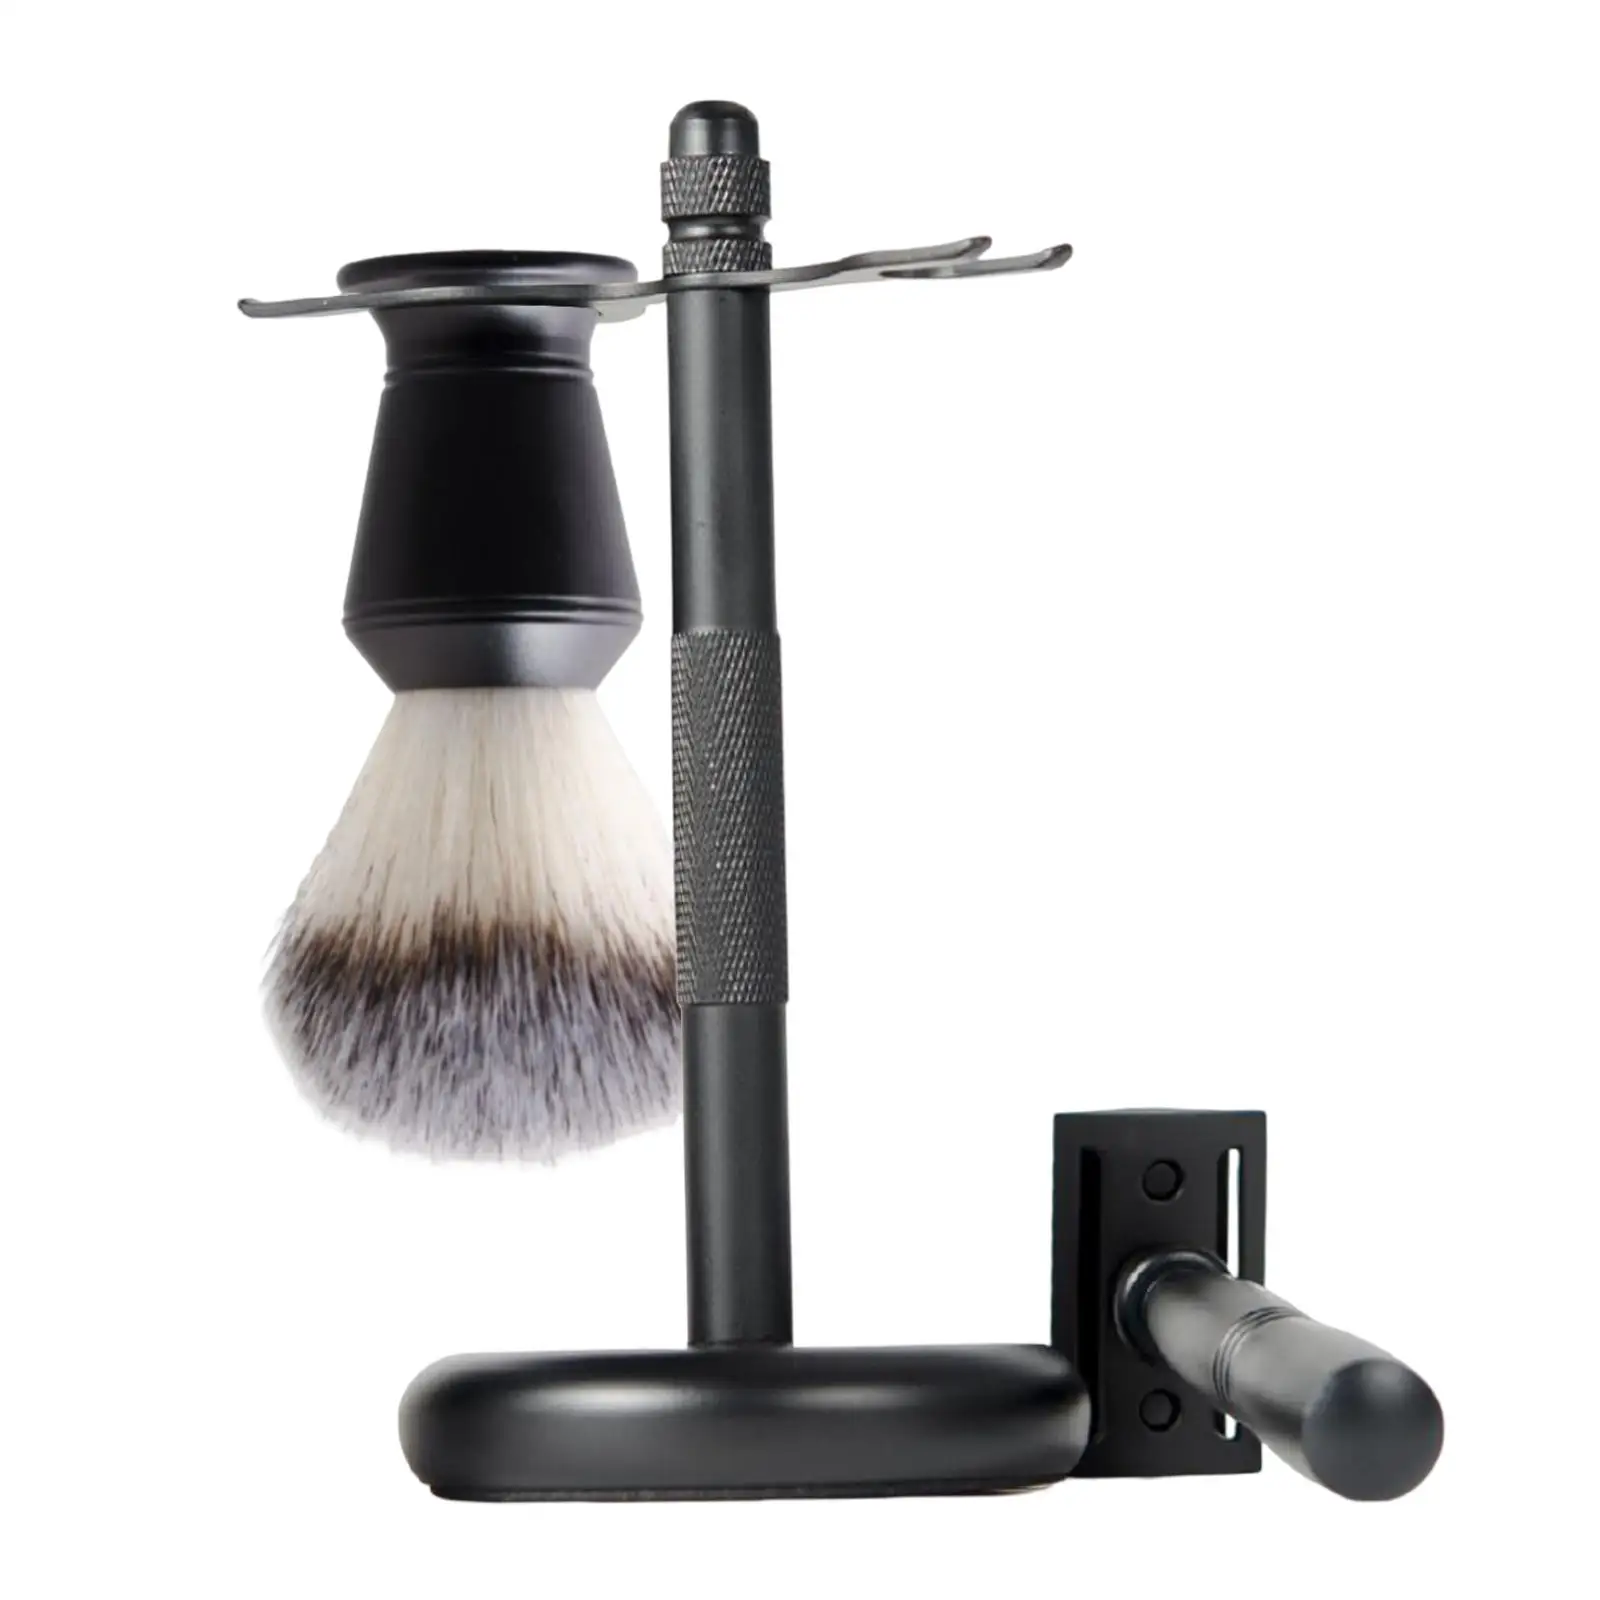 3 Pieces Shaving Set Black Elegant Shaving Brush Stand Kit Shaving Razor+ Stand Holder +shaving Brush Set Luxury Shave Accessory